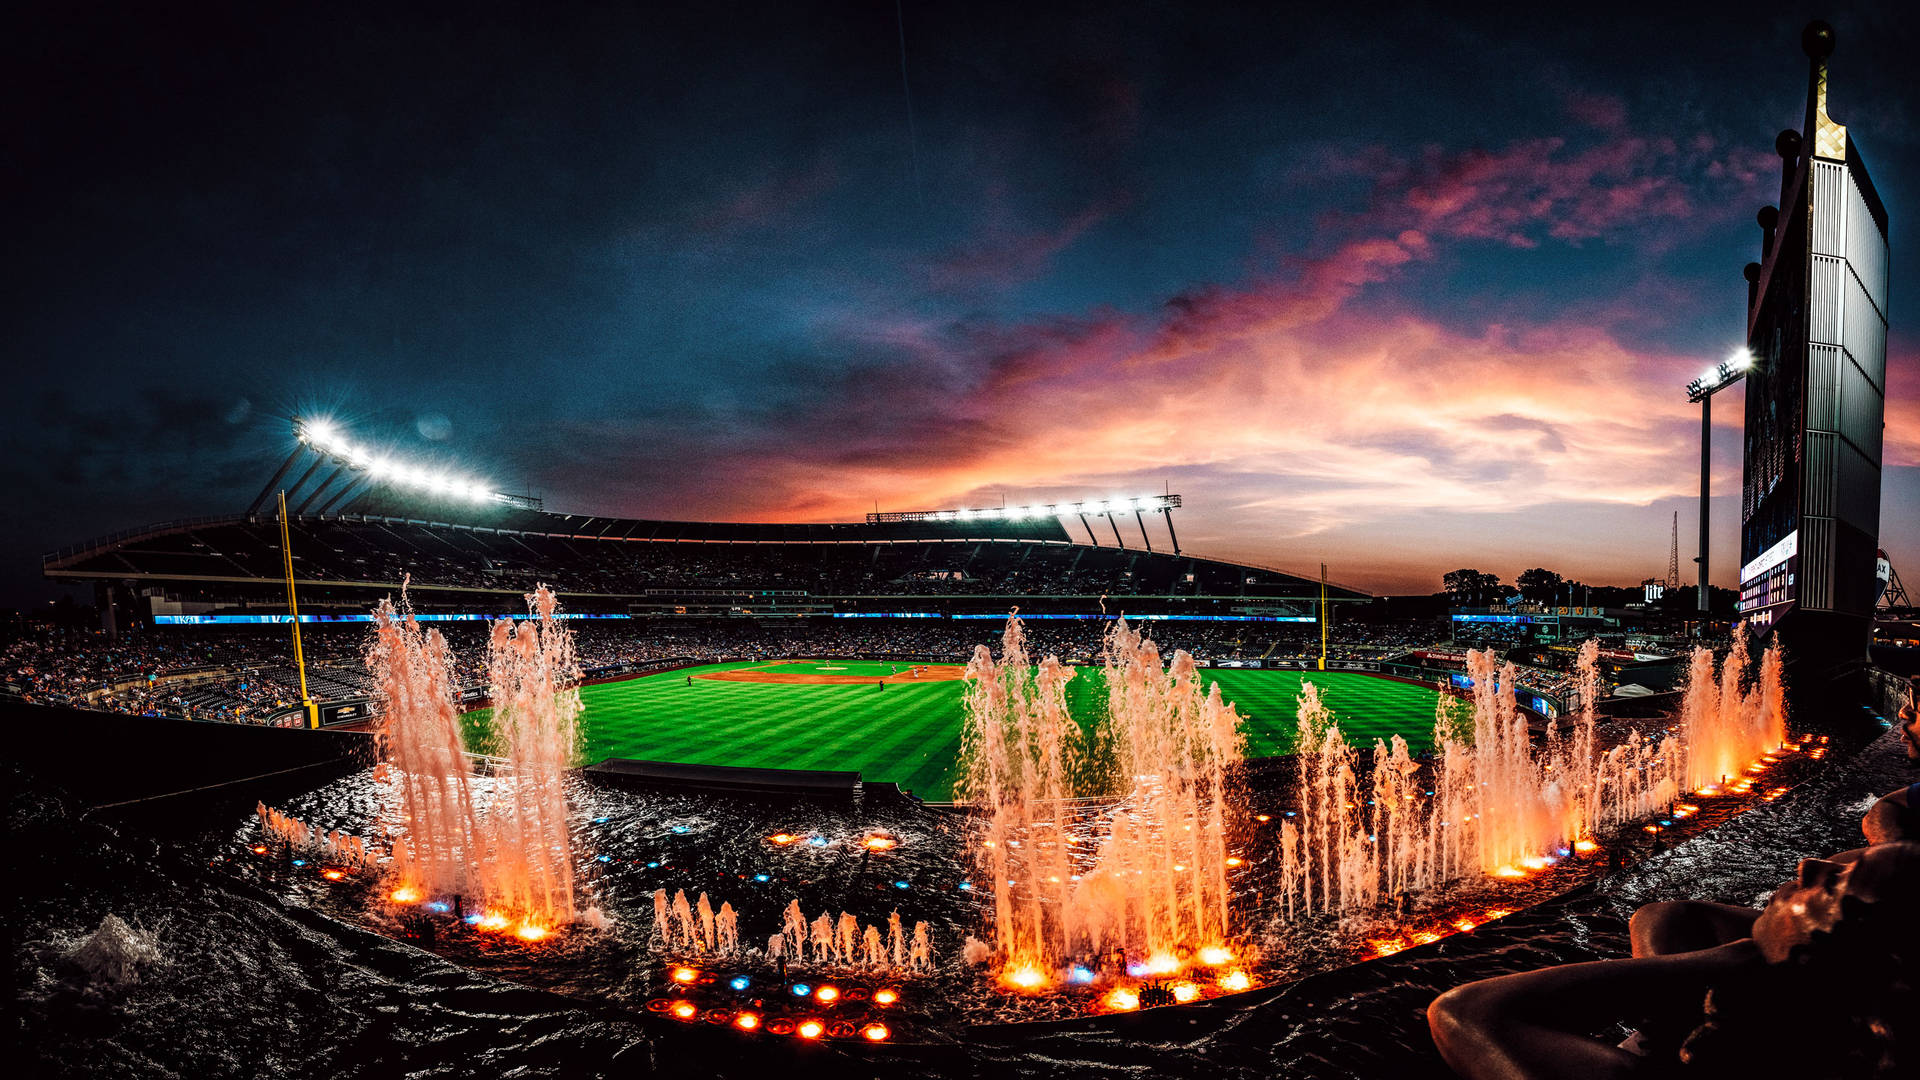 Download Enjoy the Water Show in Kauffman Stadium in Kansas City